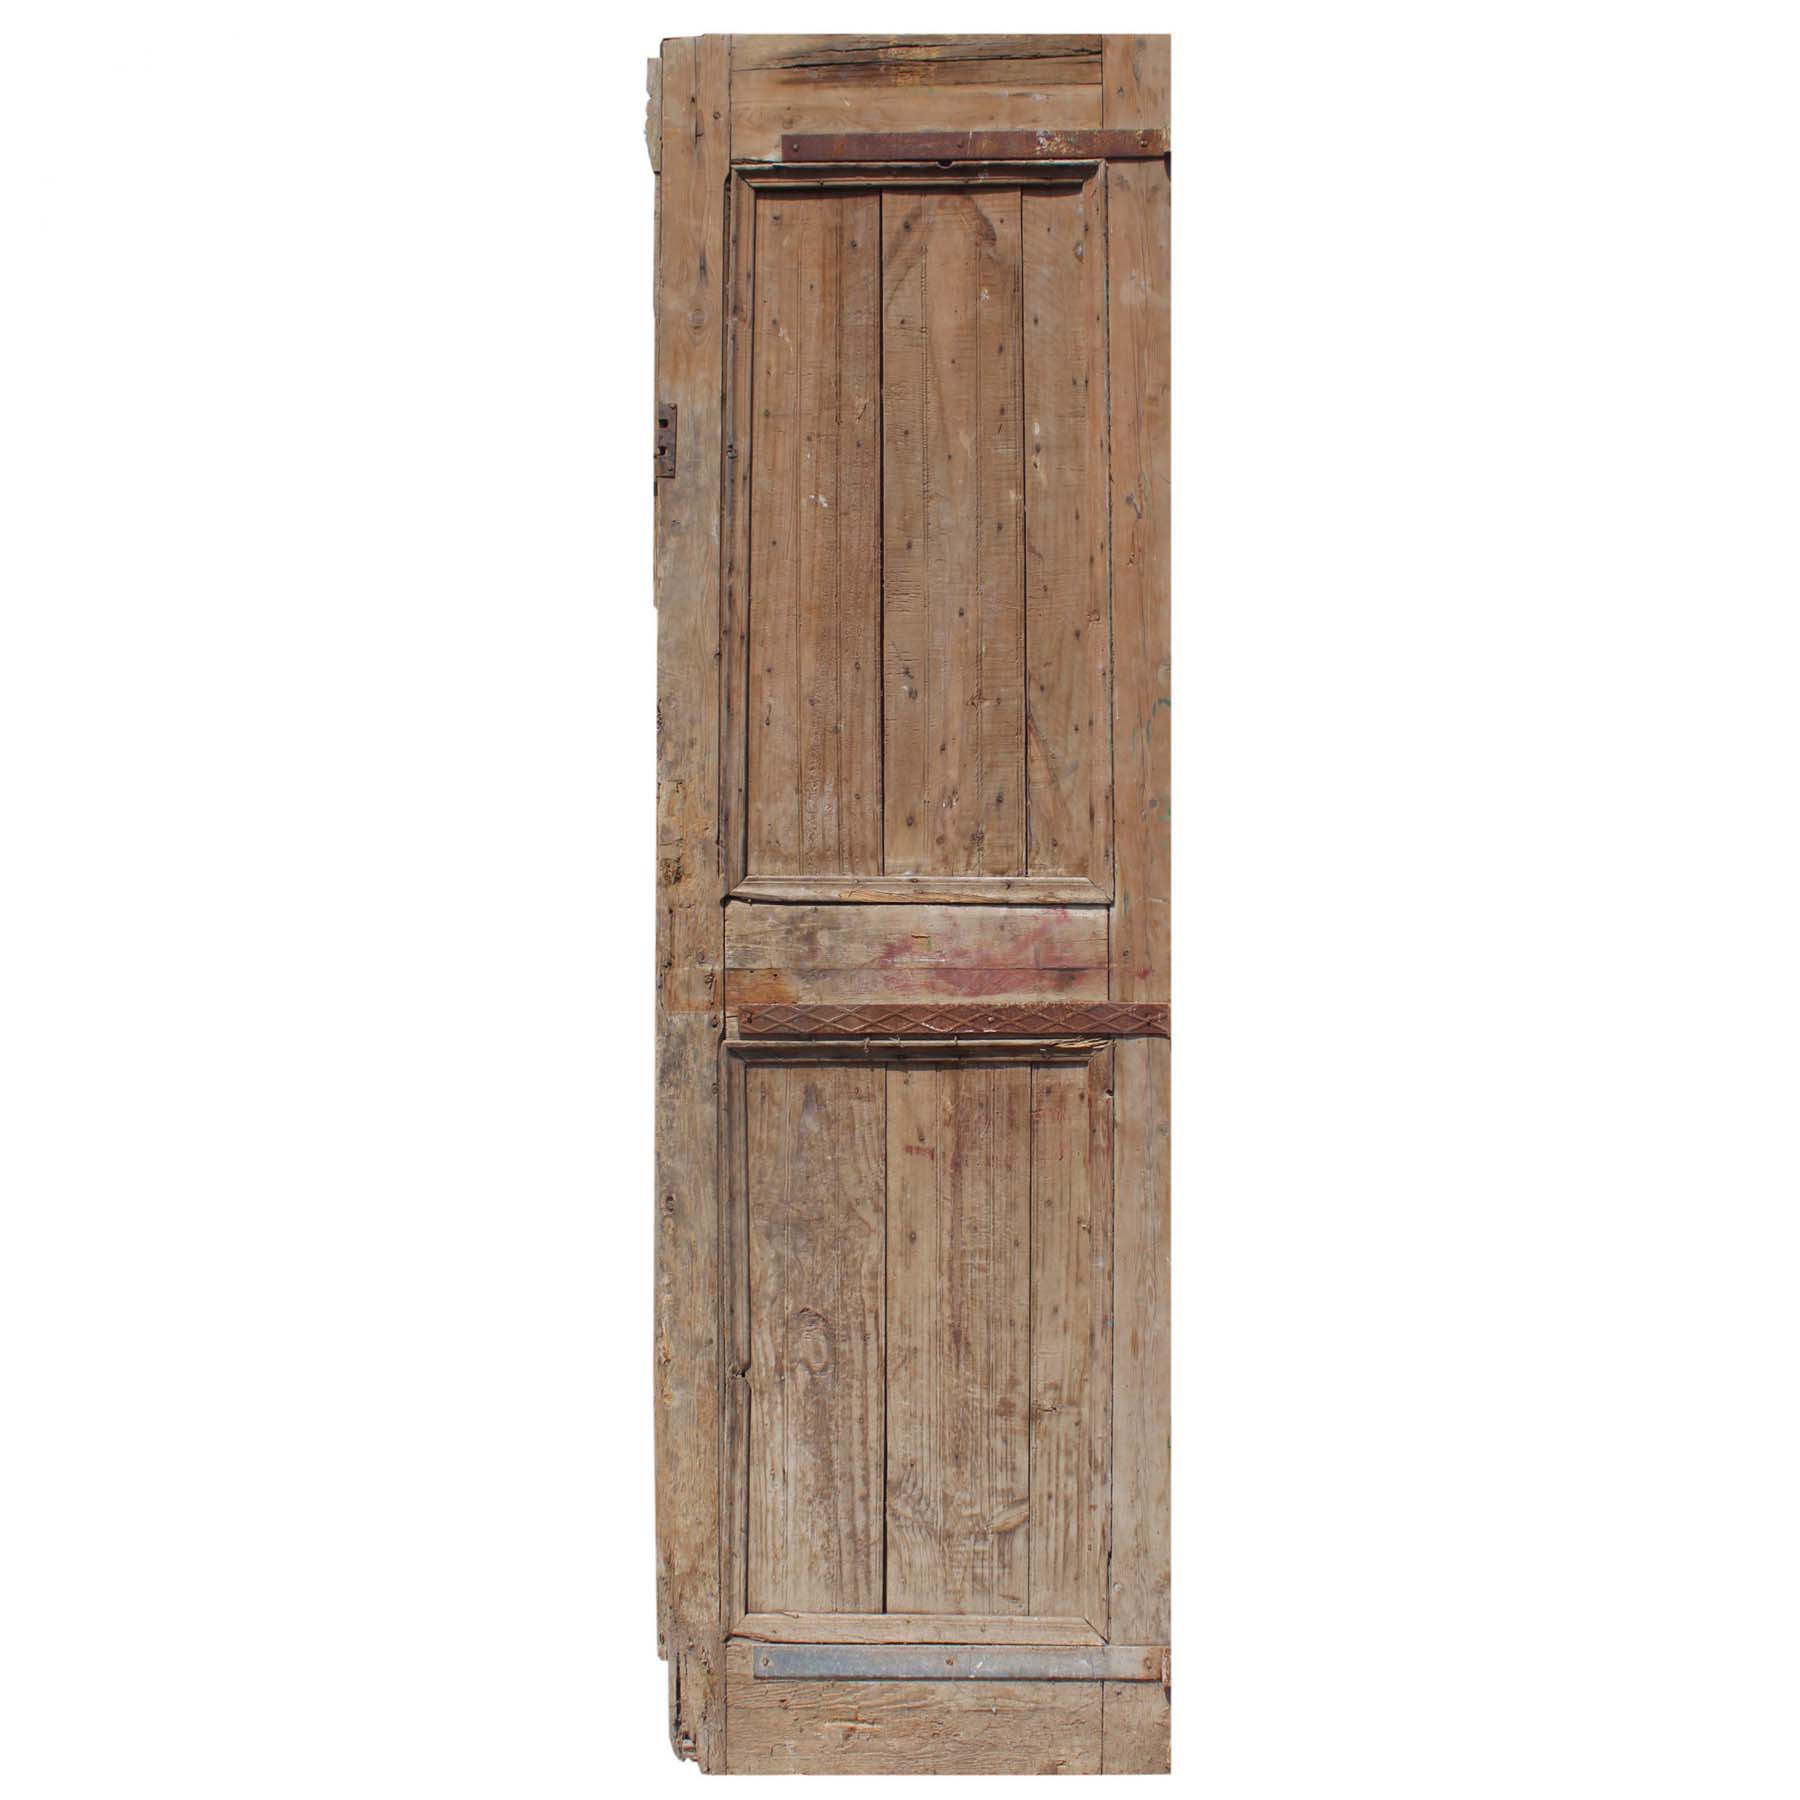 SOLD Antique 27” Door with Carved Details-69165